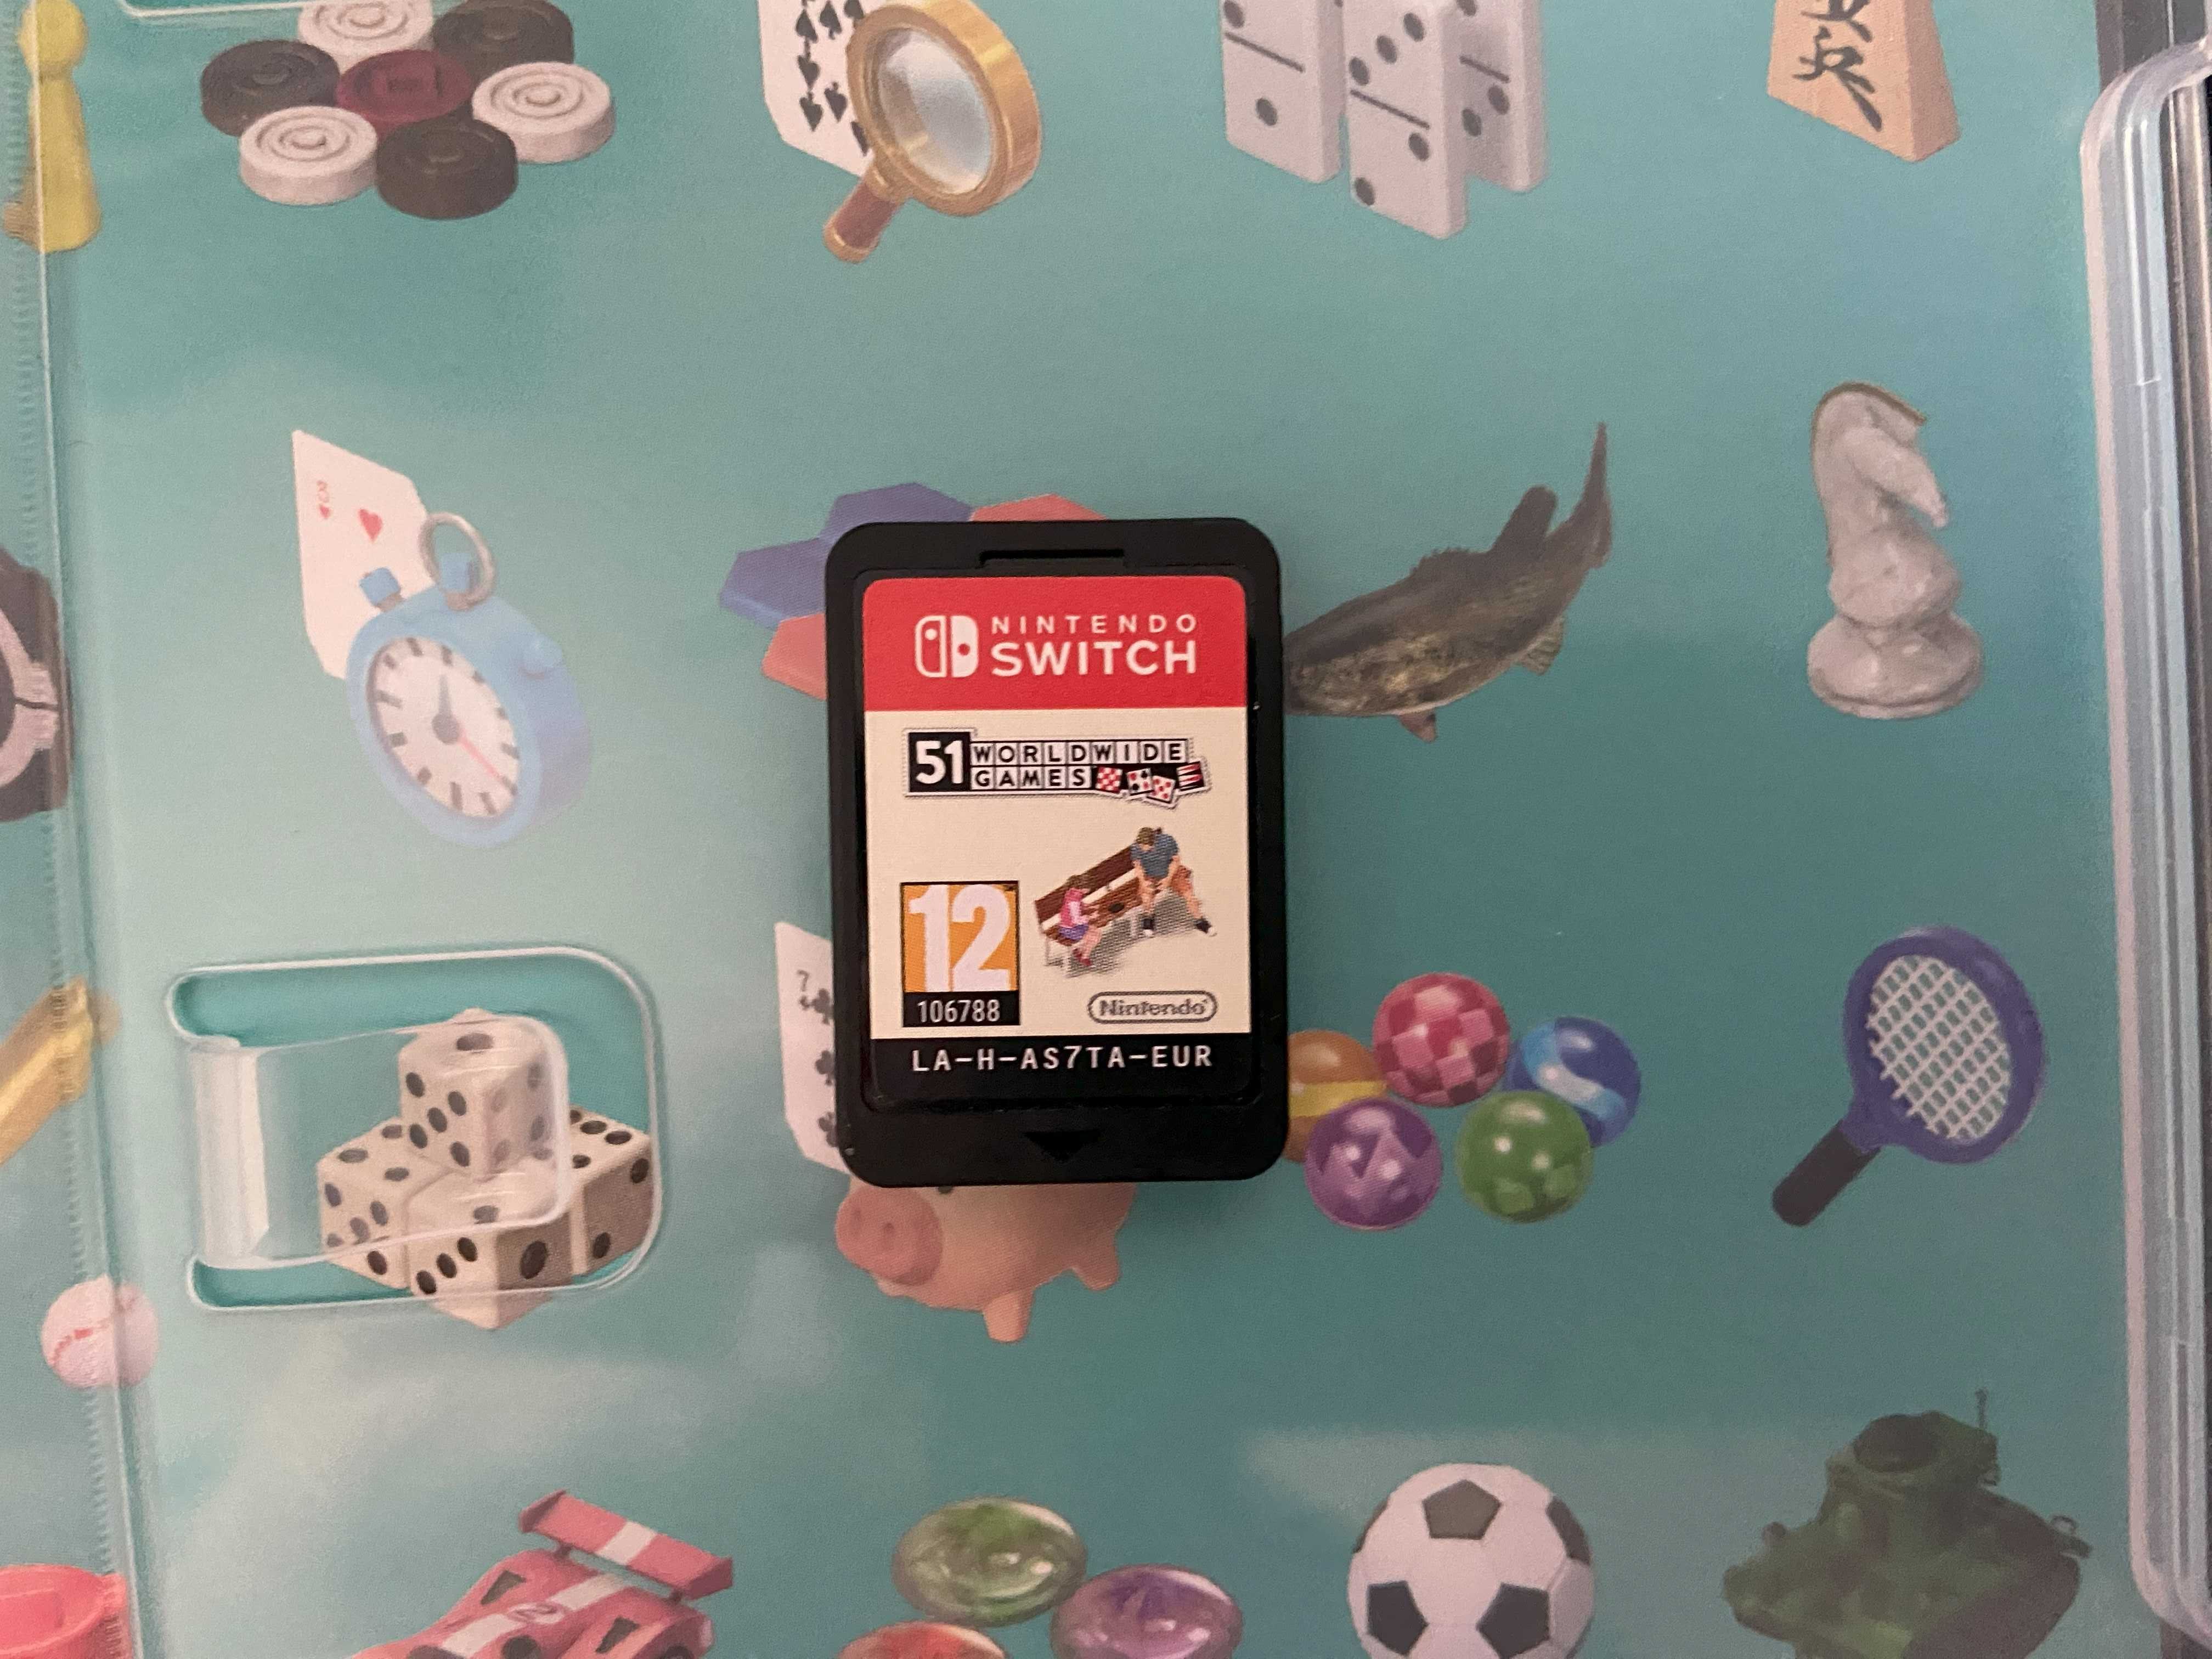 51  Worldwide Games - Nintendo Switch